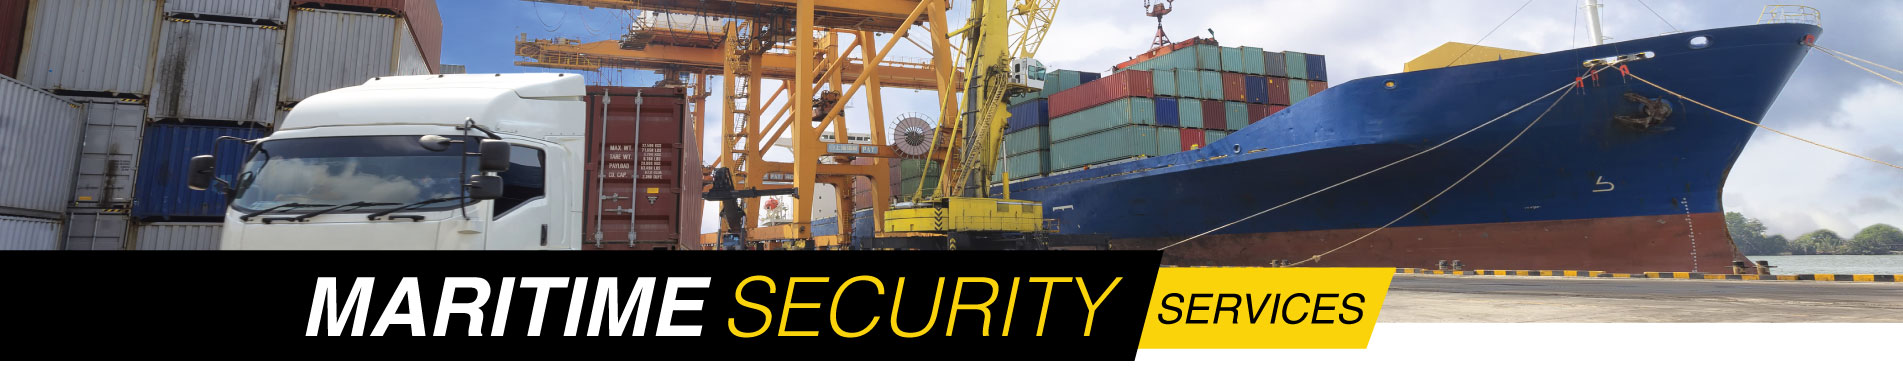 Houston Area Maritime Security Services